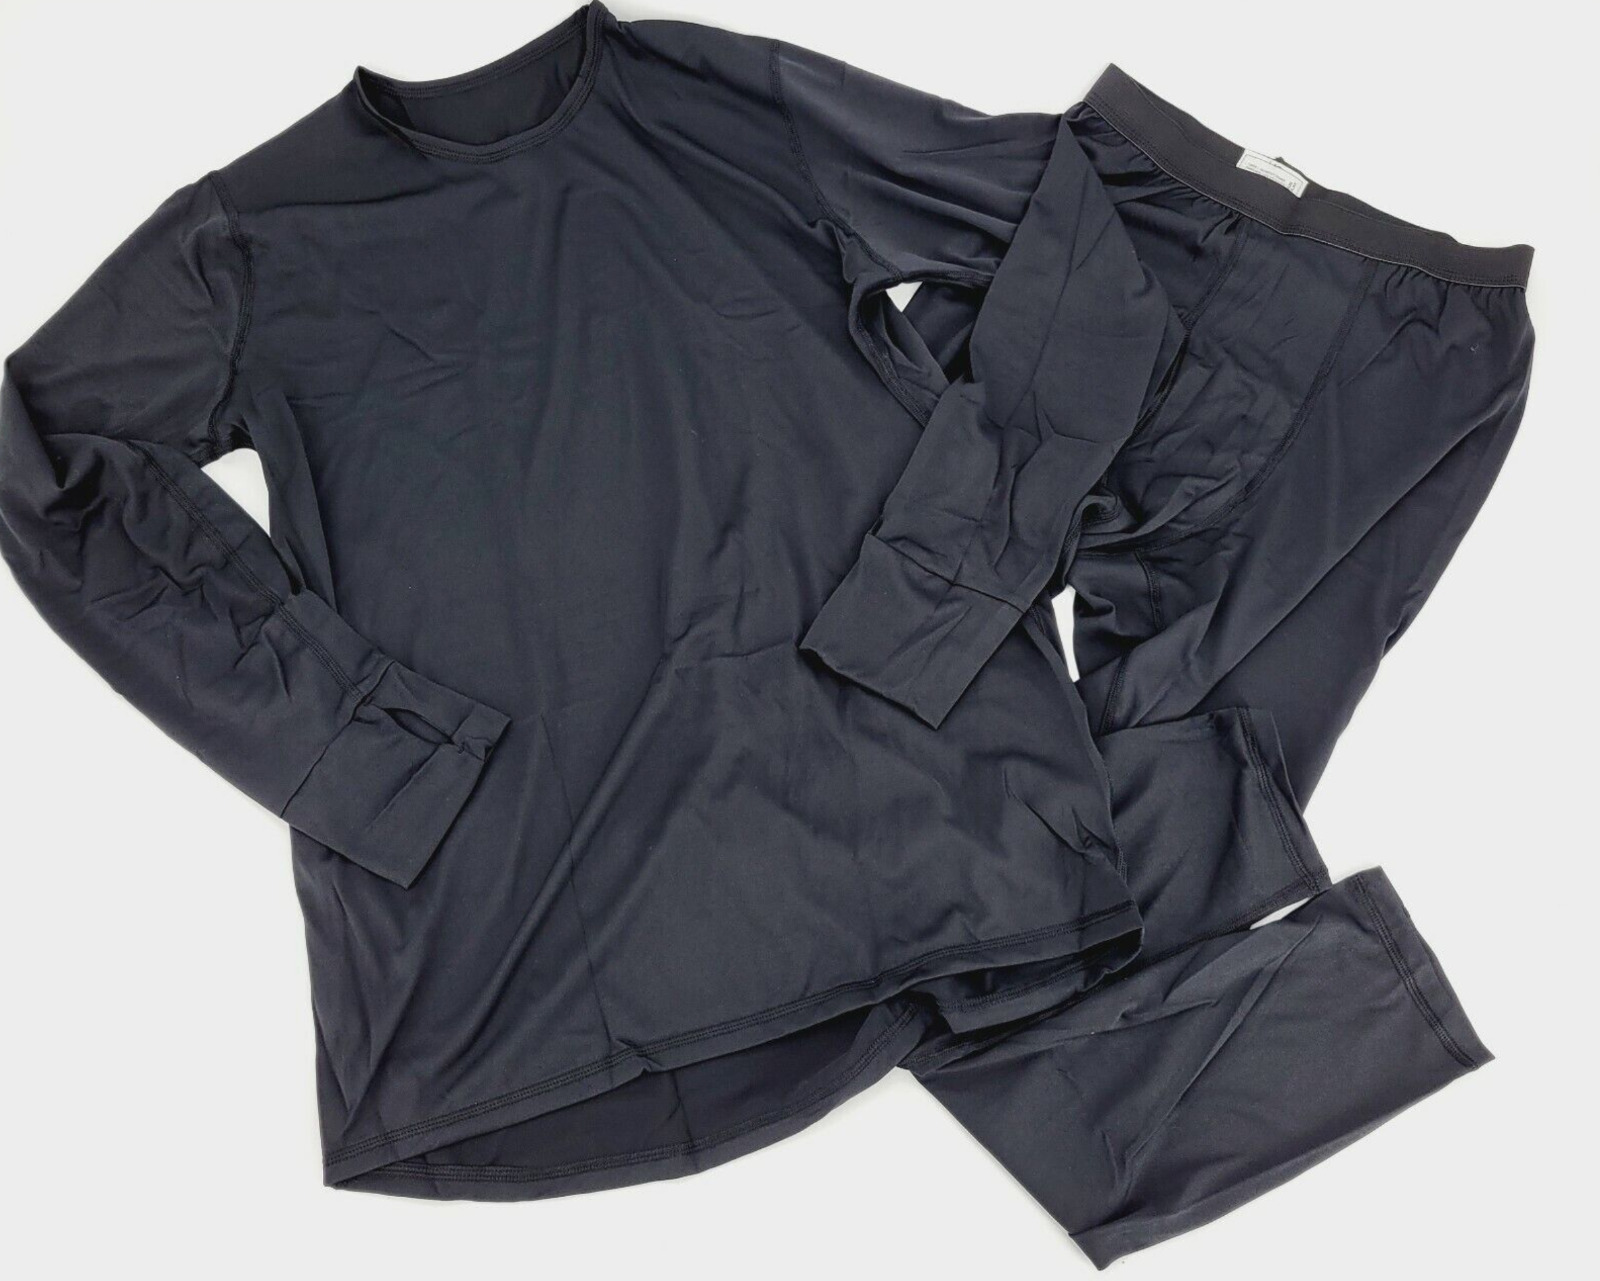 Polartec Power Dry Silkweight Underwear Set Small Reg Ninja Suit Black